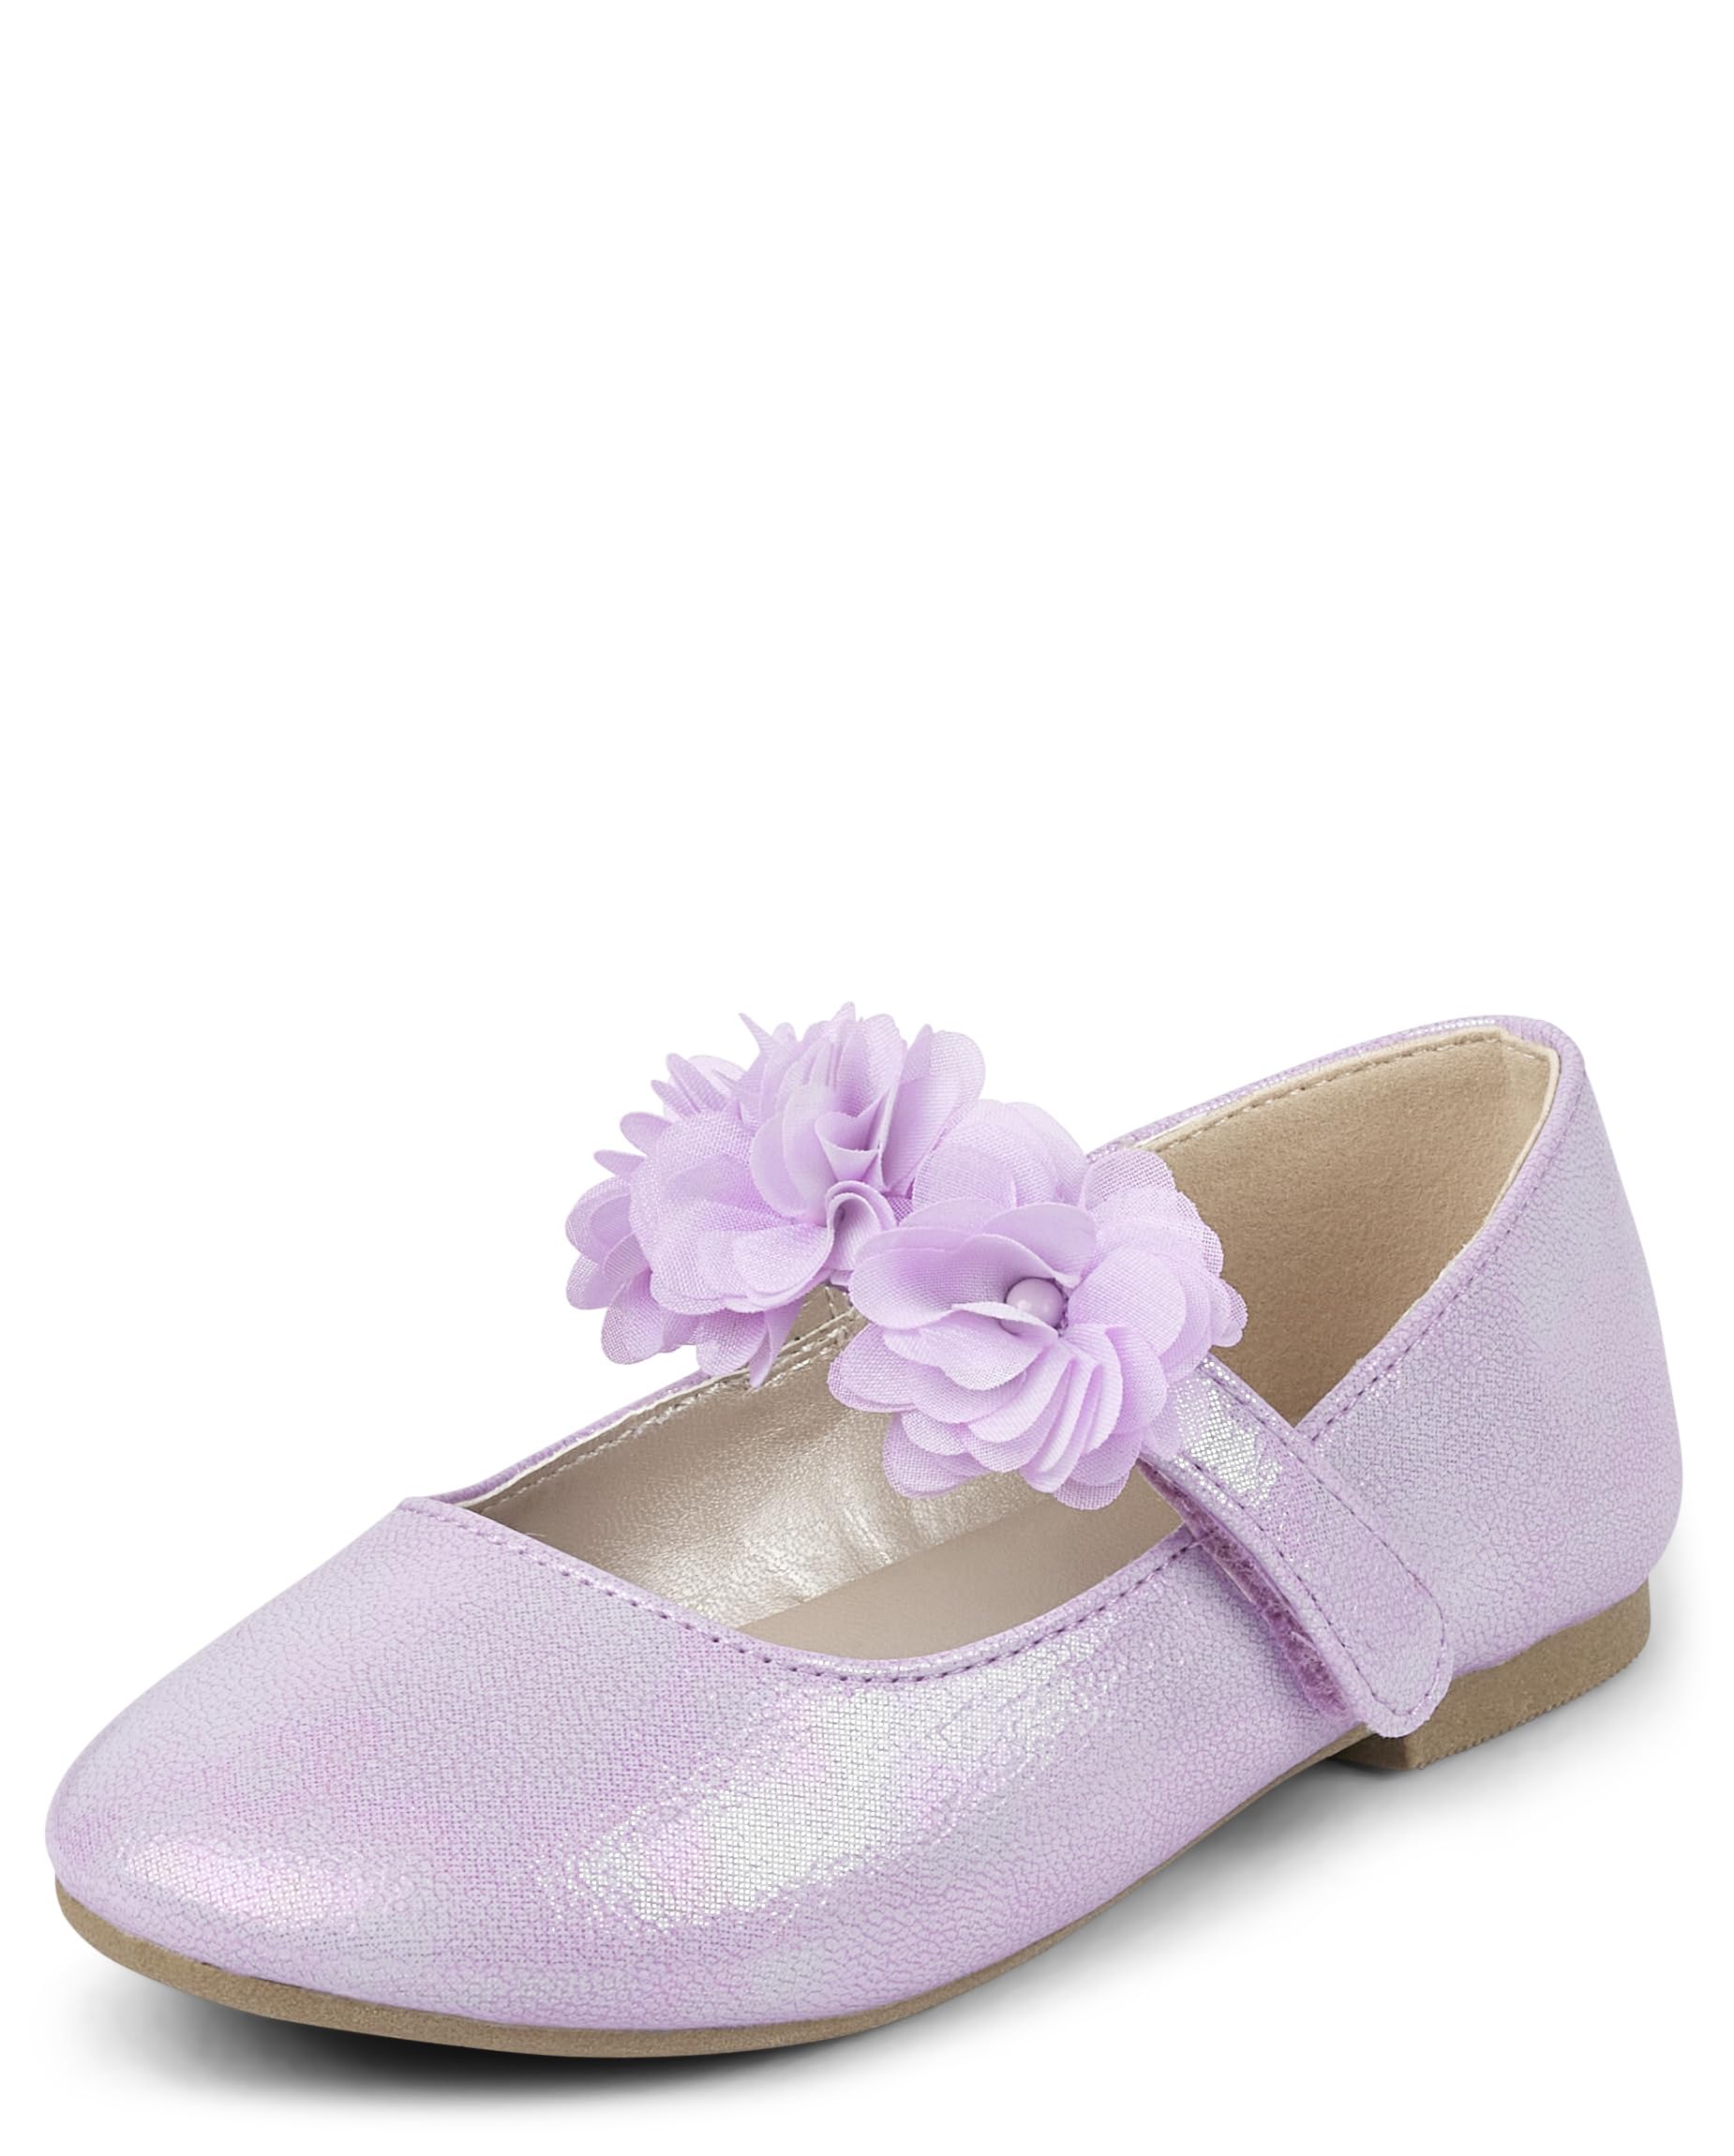 Gymboree Girl's and Toddler Dressy Ballet Flat